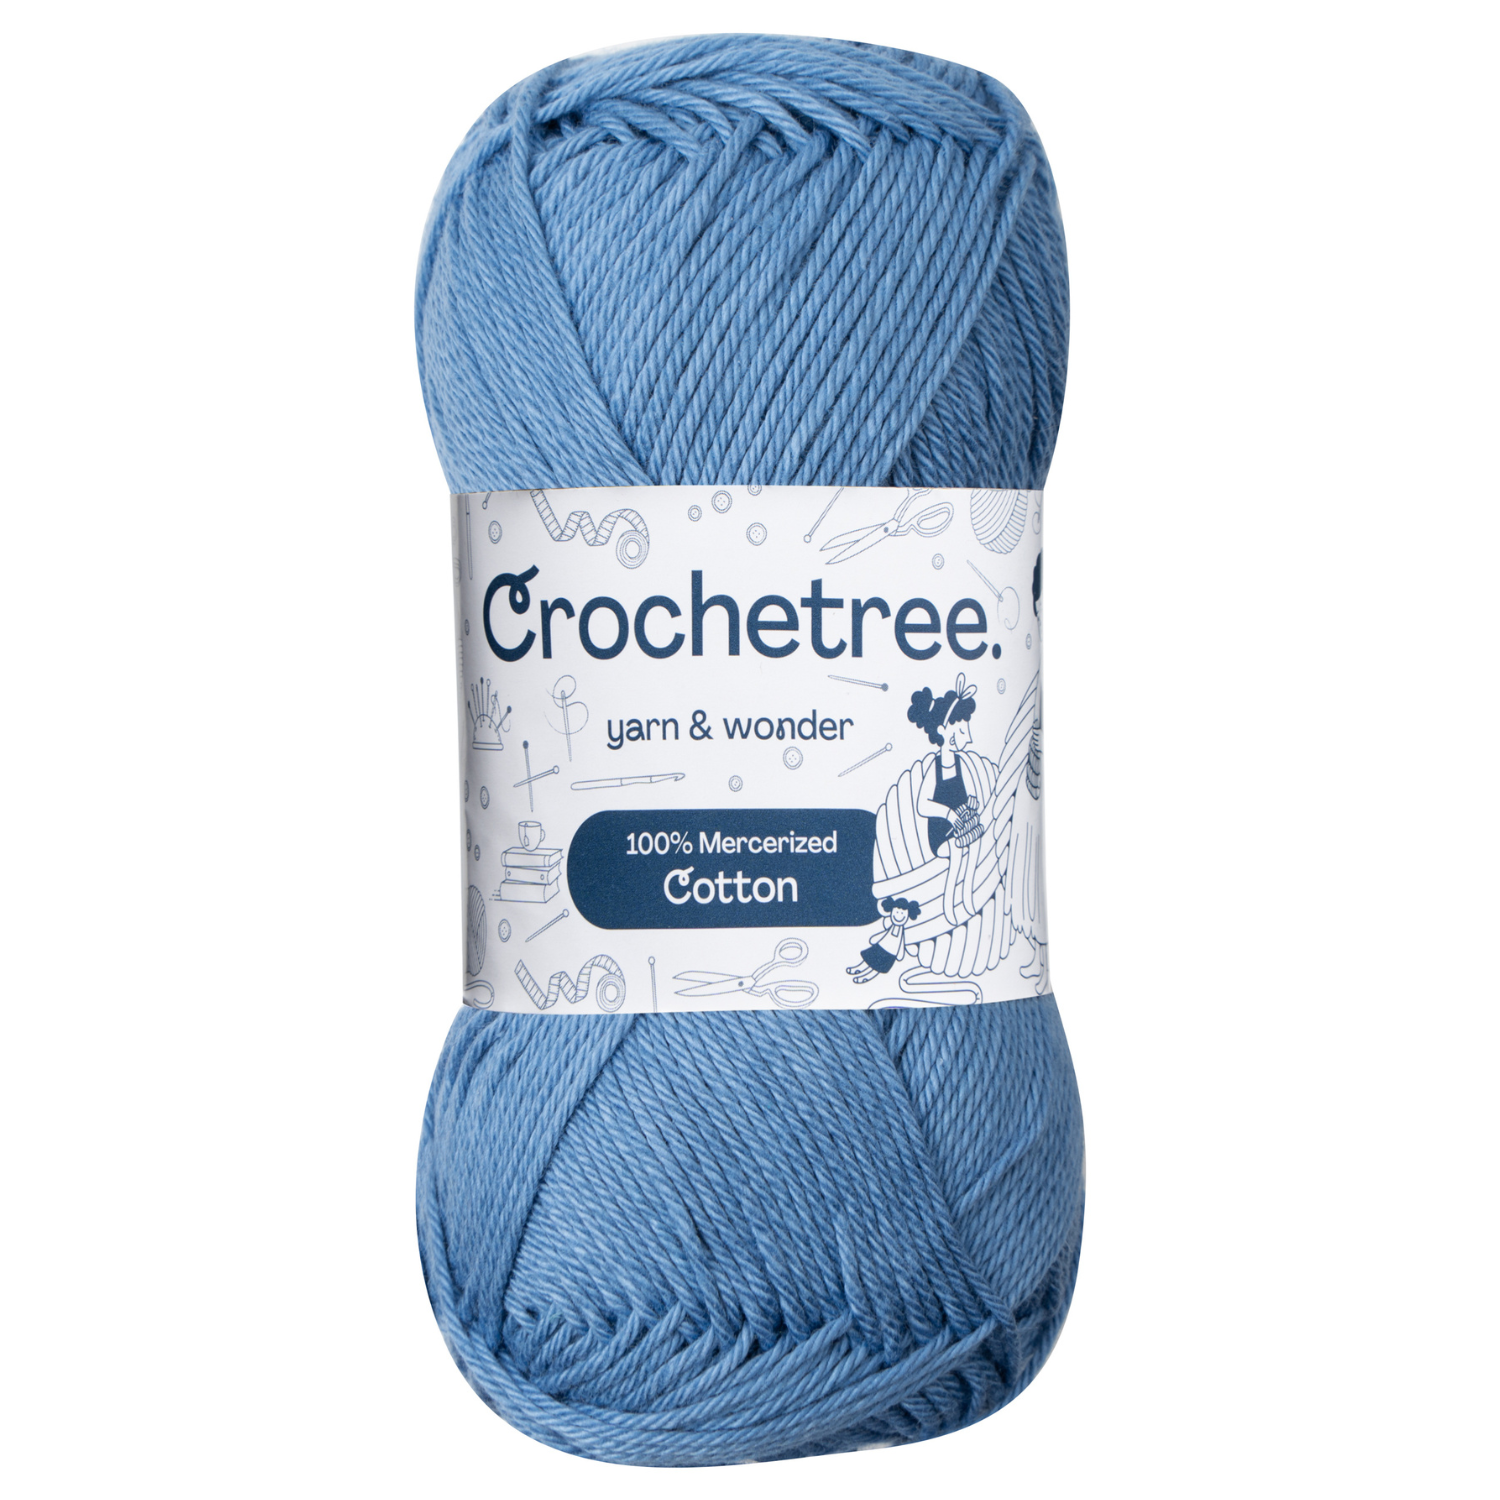 Crochetree 100% Mercerized Cotton Yarn, 50g / 125m, 4 Ply Fingering Weight, Amigurumi Yarn Carmine Red